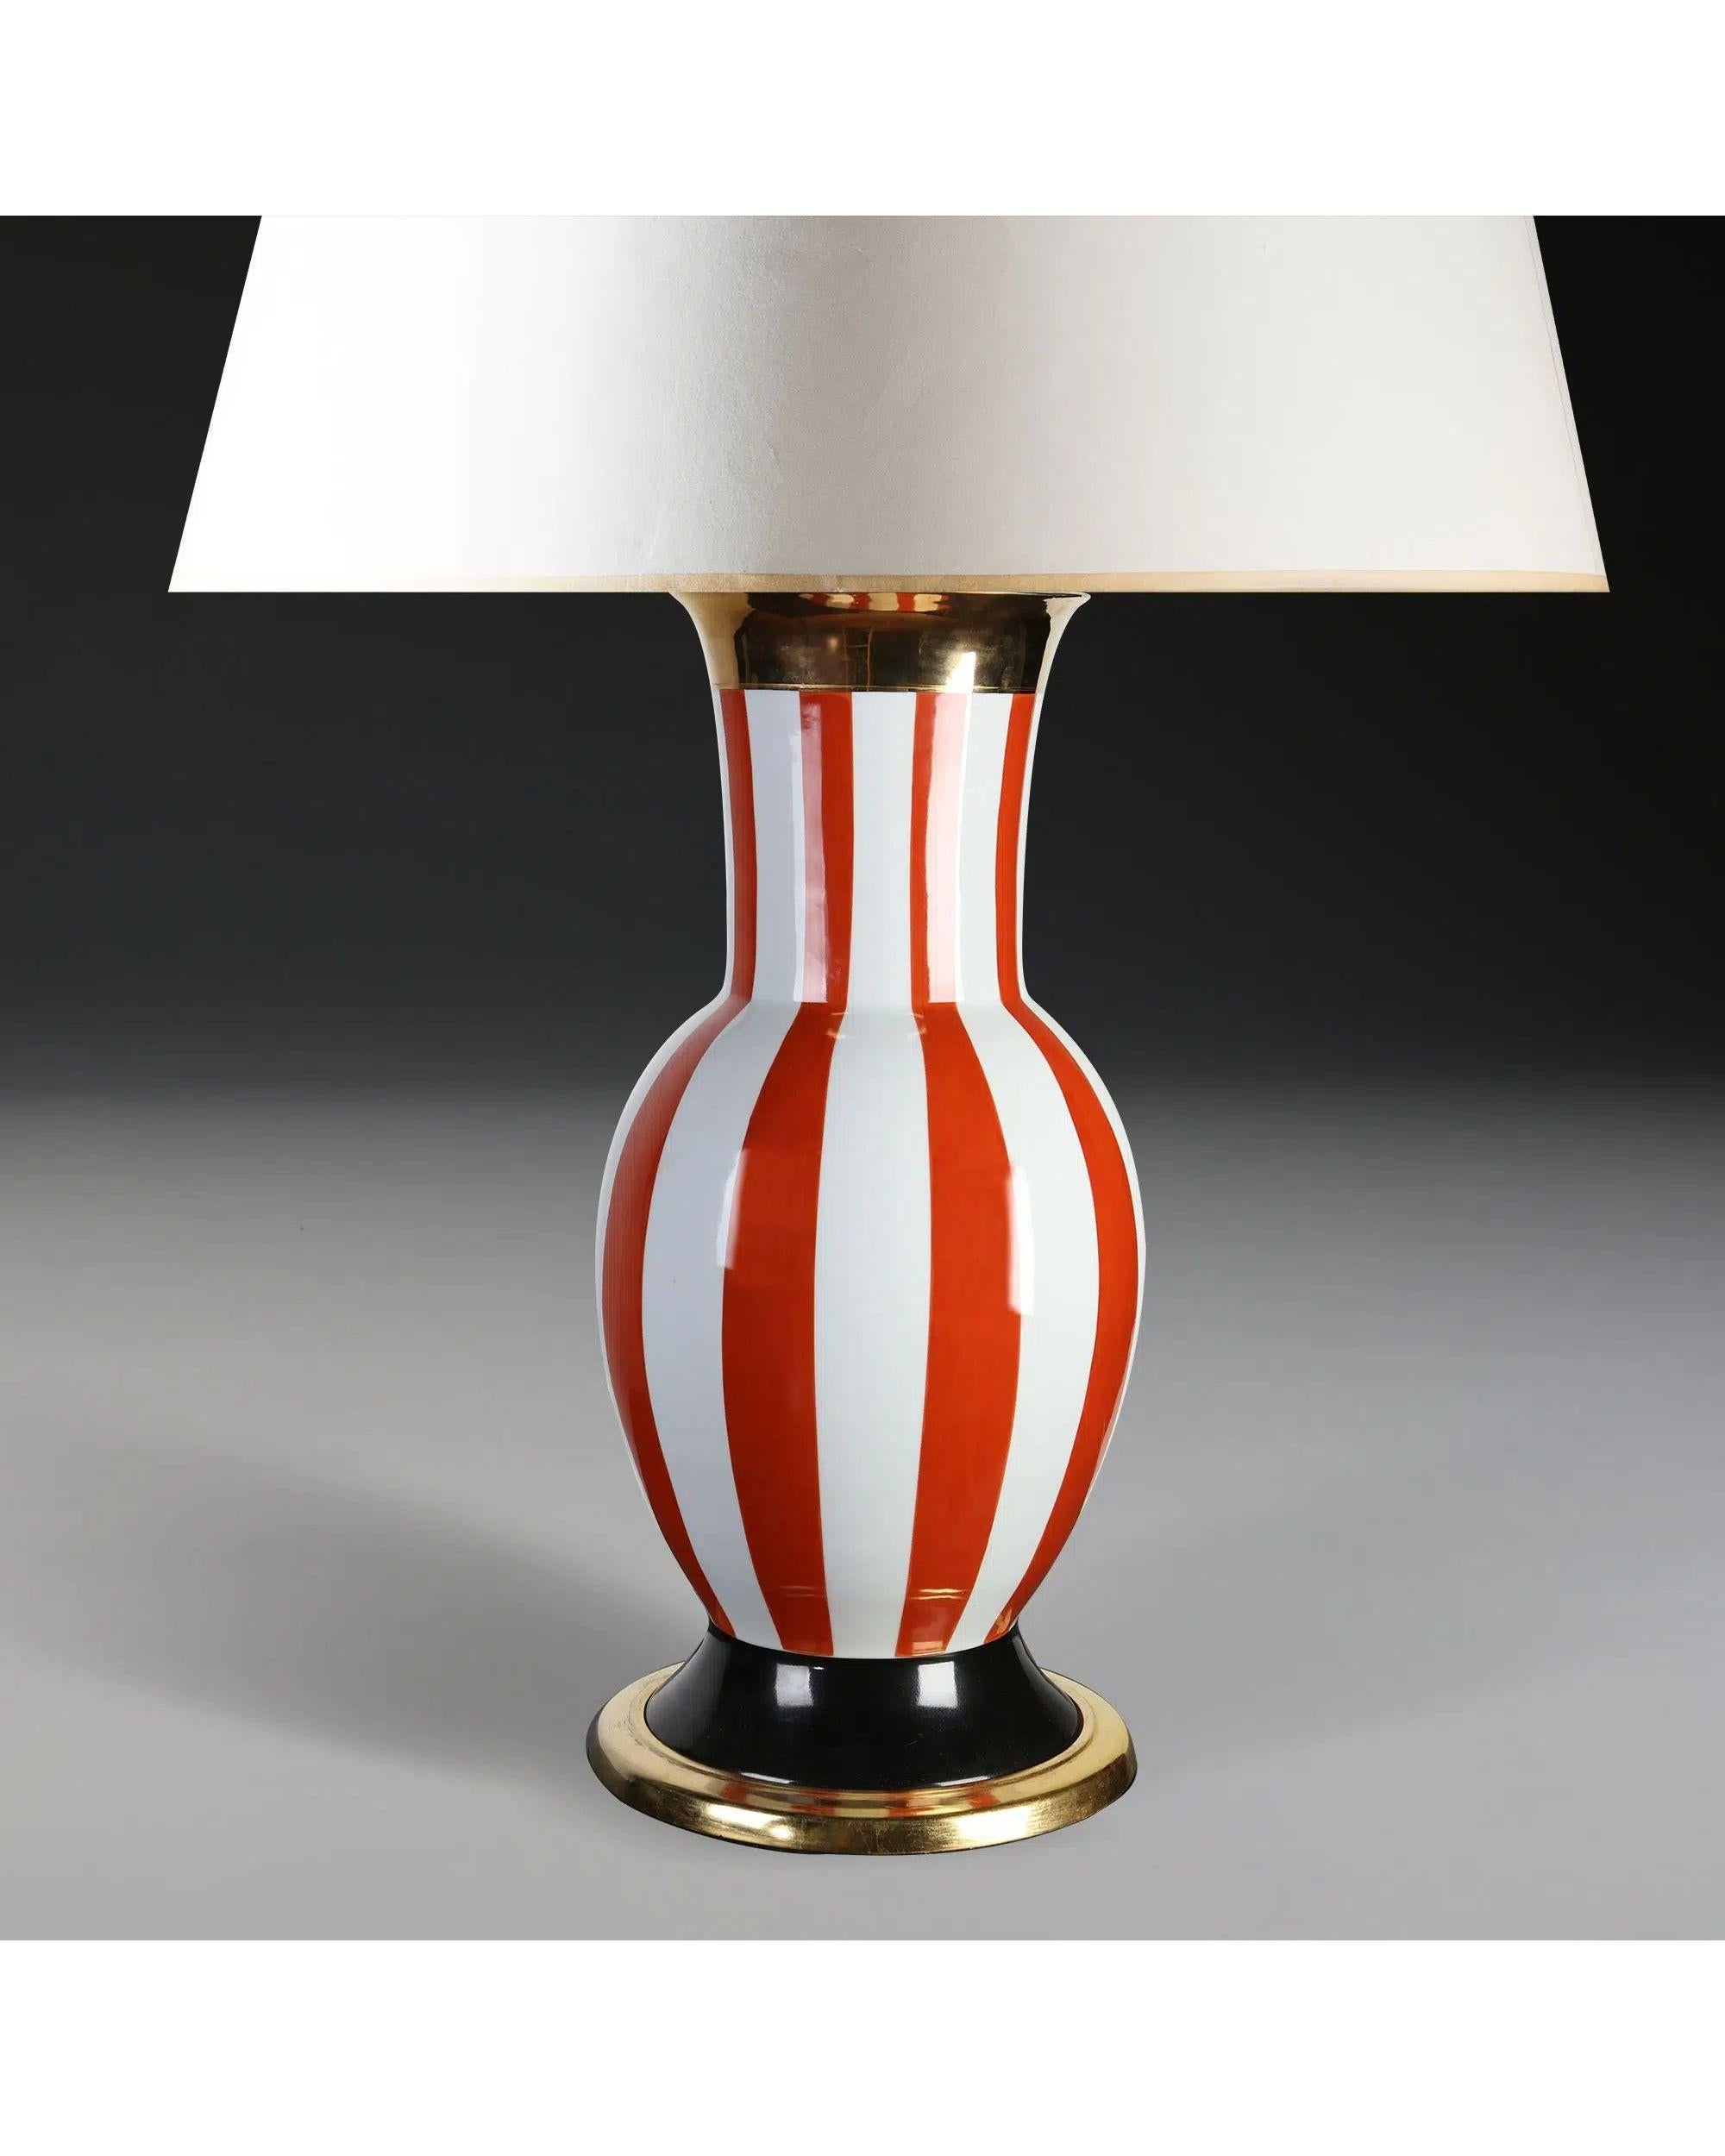 The Vintage Italian Lamp im Stil des italienischen Karnevals, Frédéric De Luca (Moderne) im Angebot